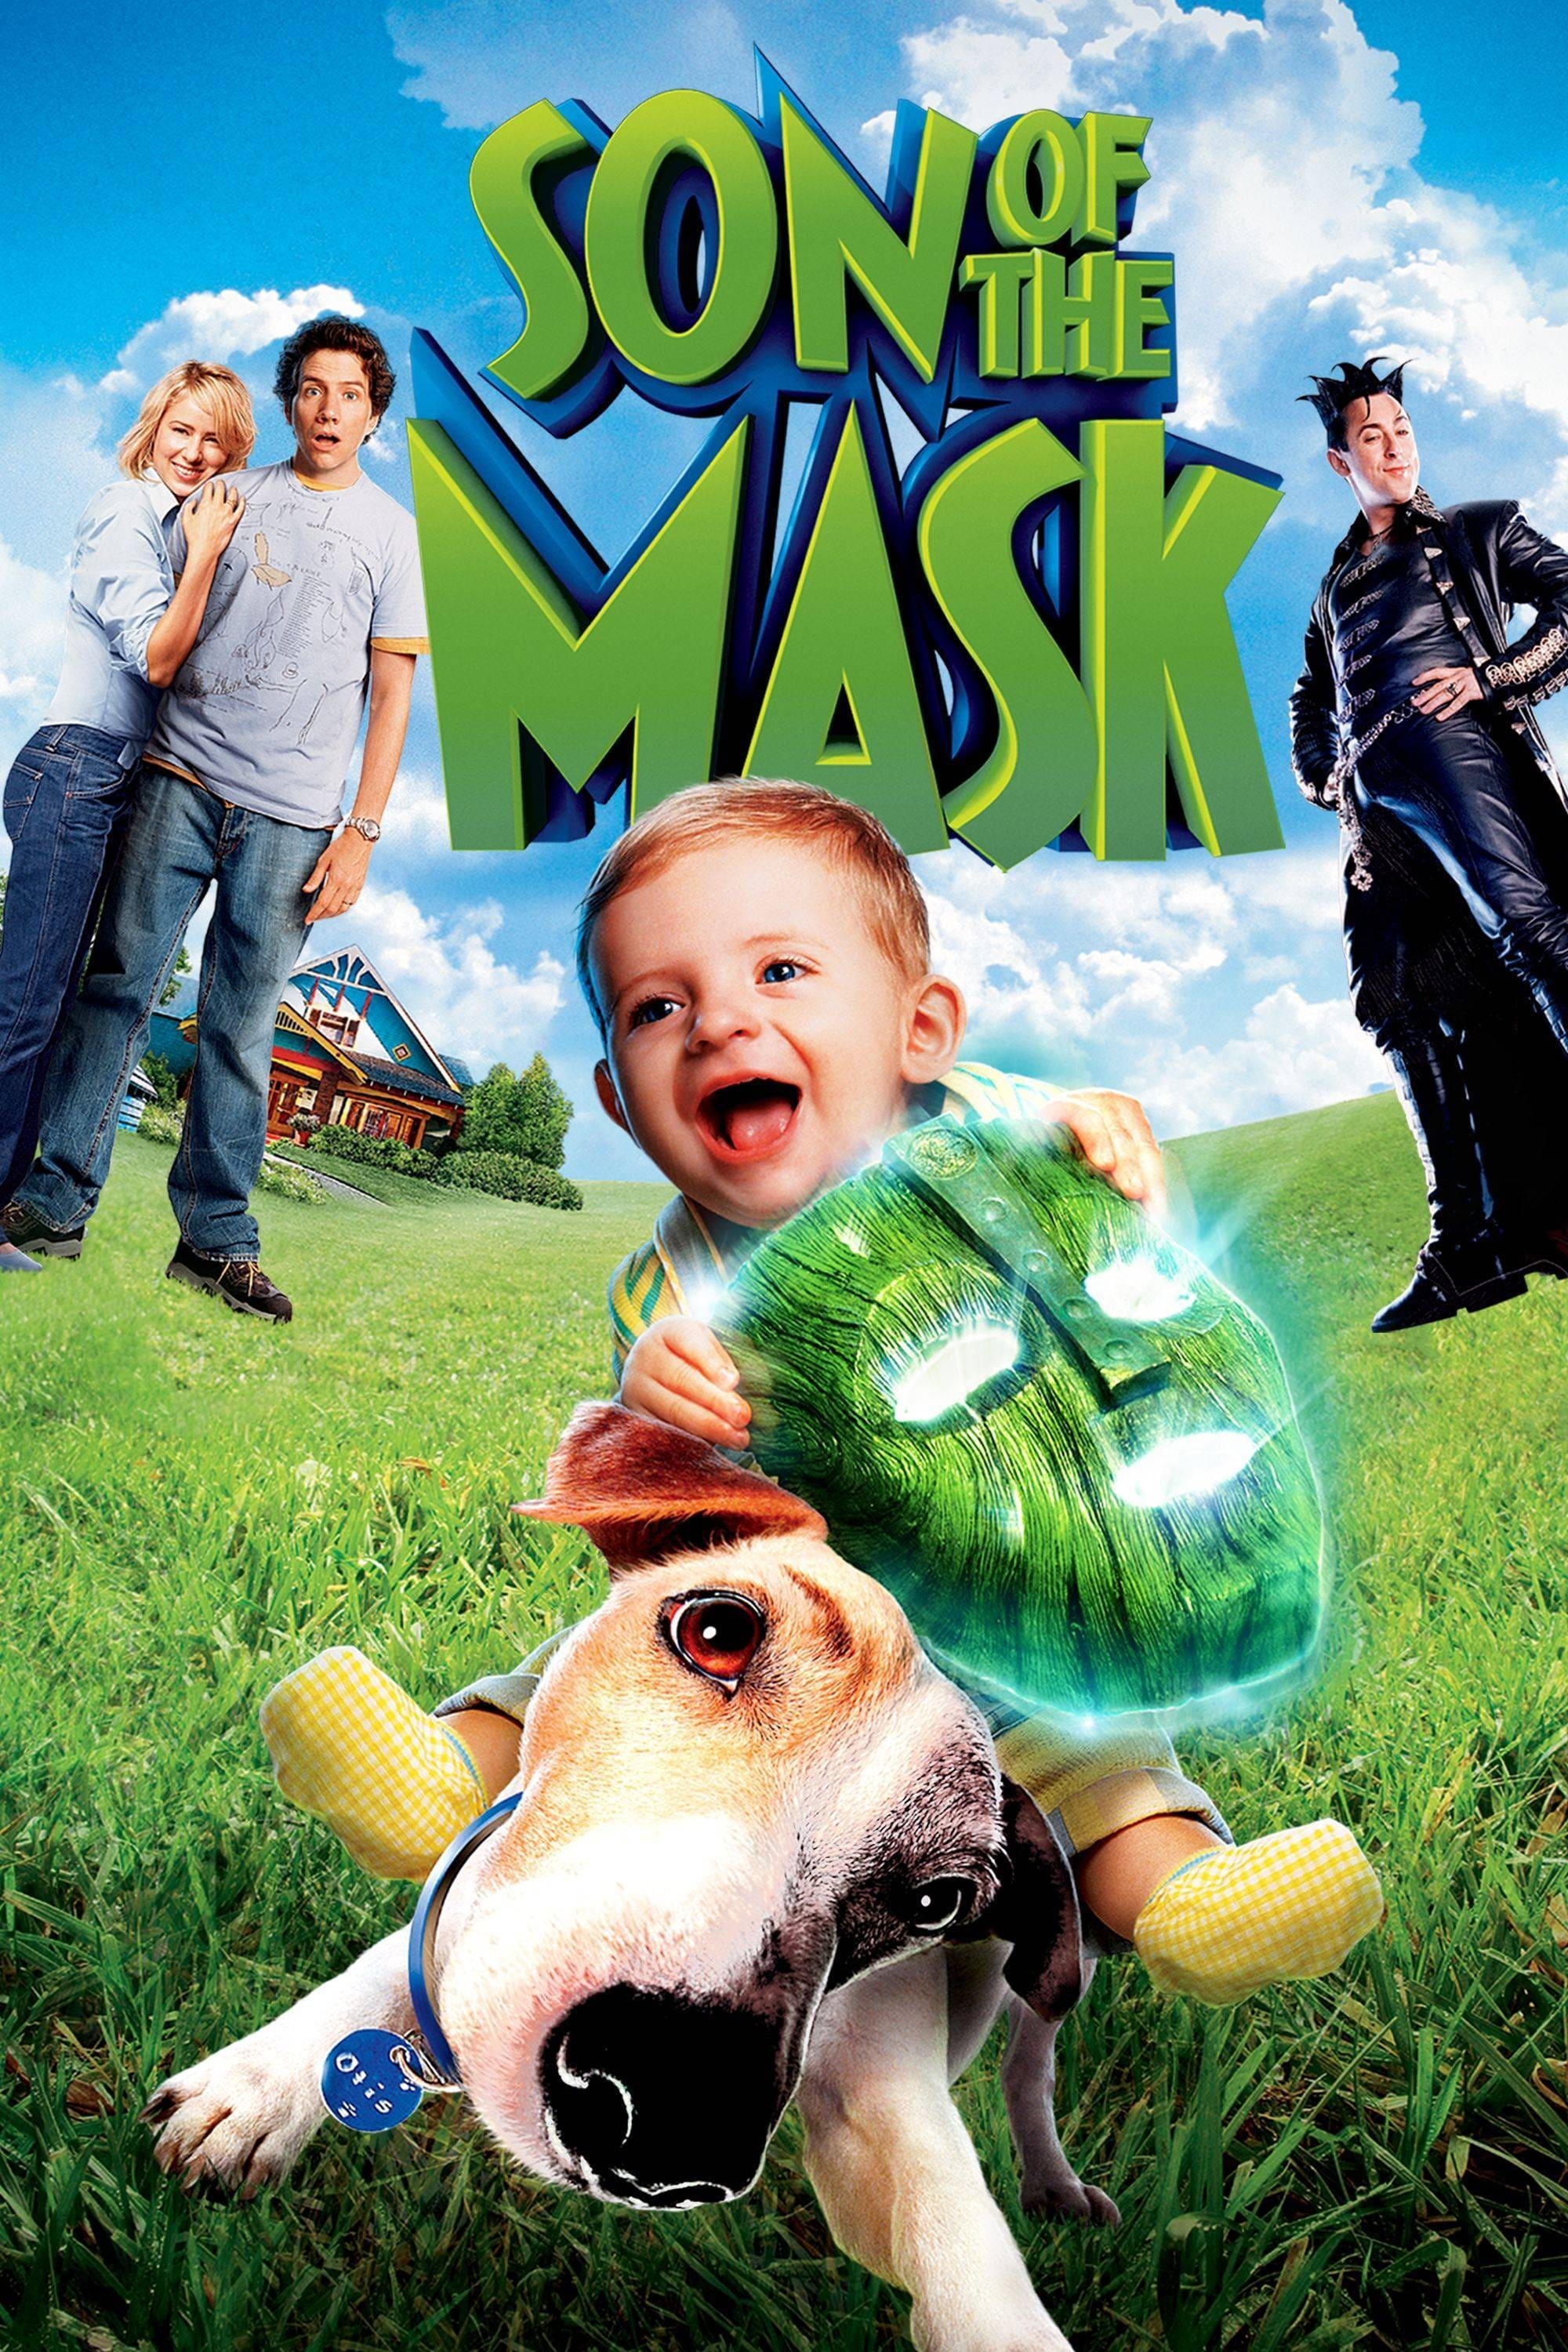 Le Fils du Mask (2005)